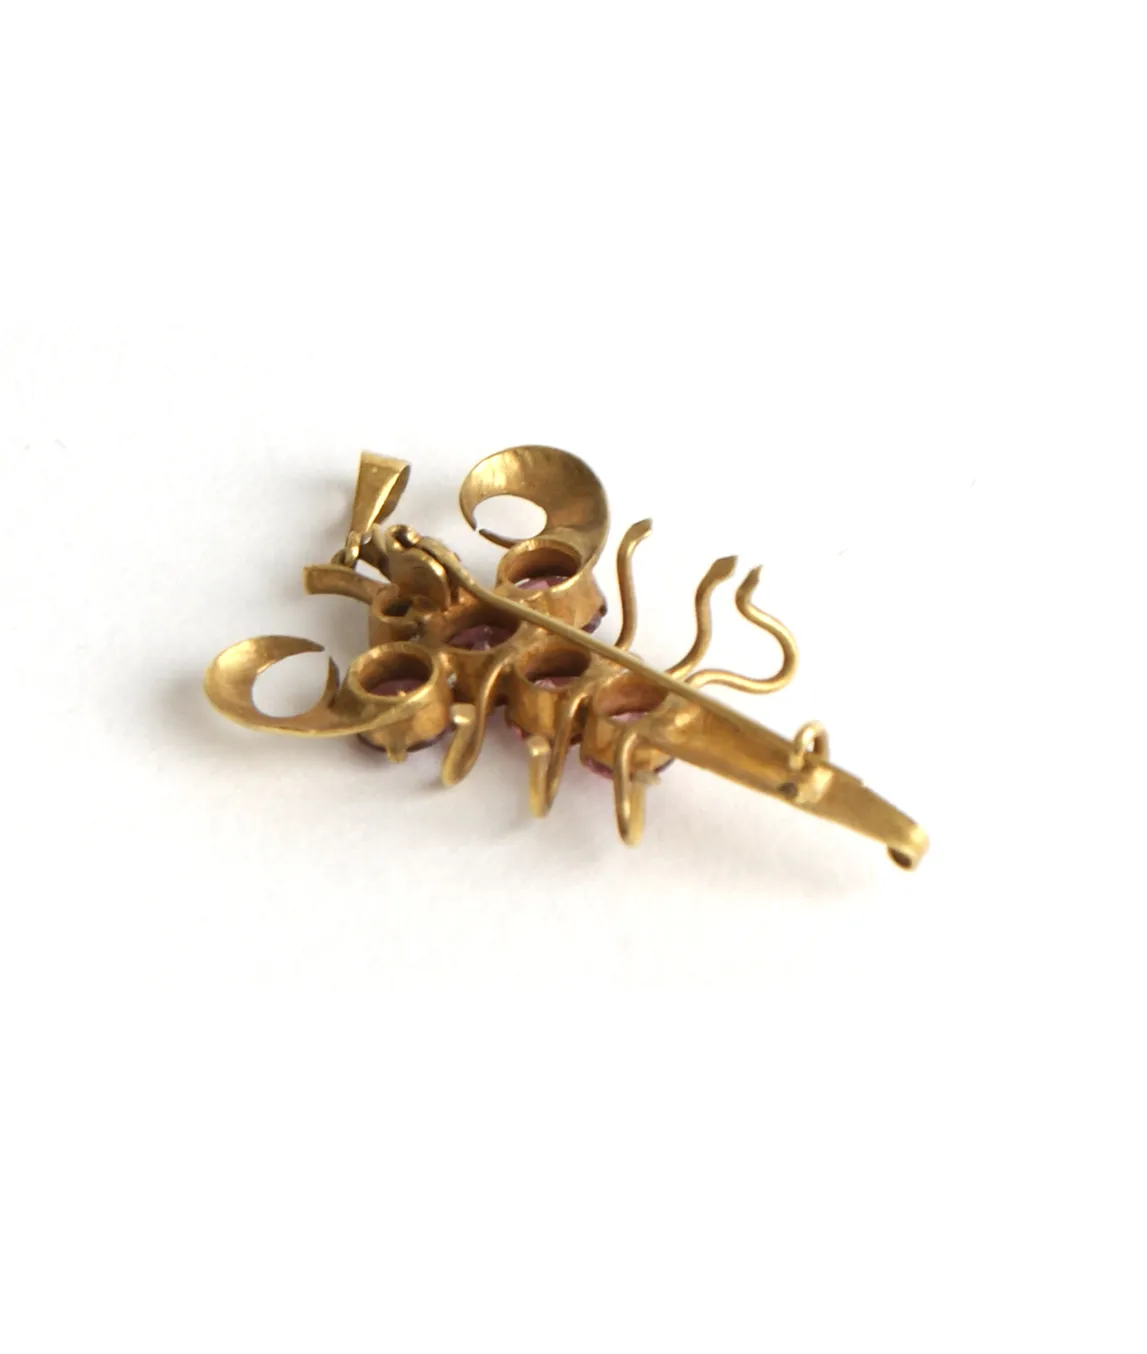 Scorpion pin reverse